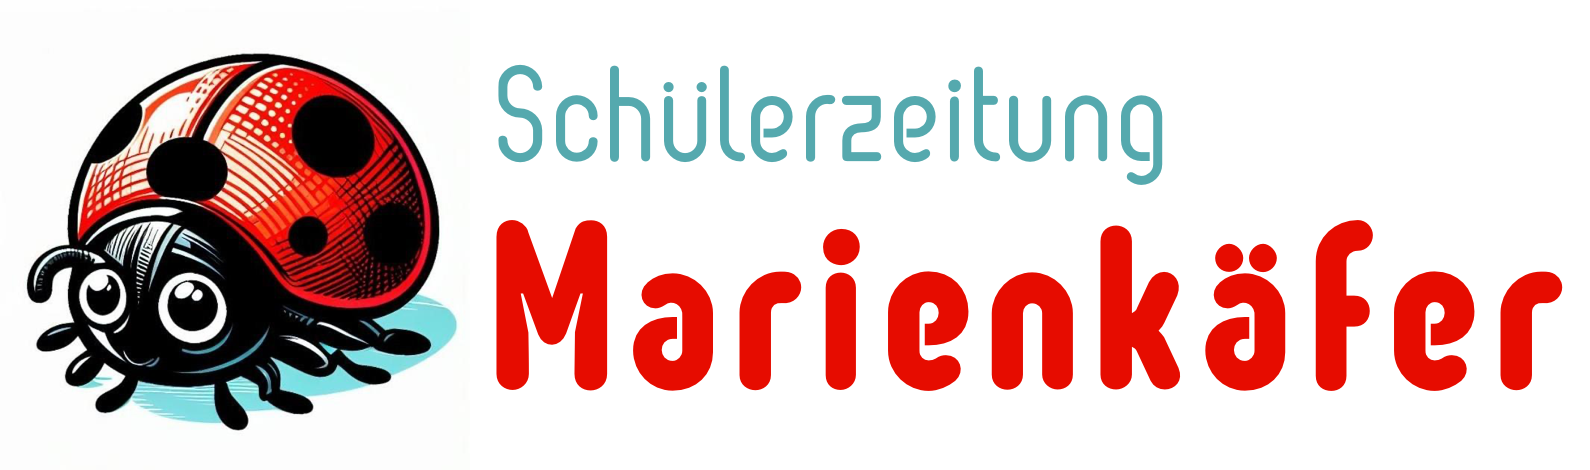 Marienkäfer Logo der Schülerzeitung